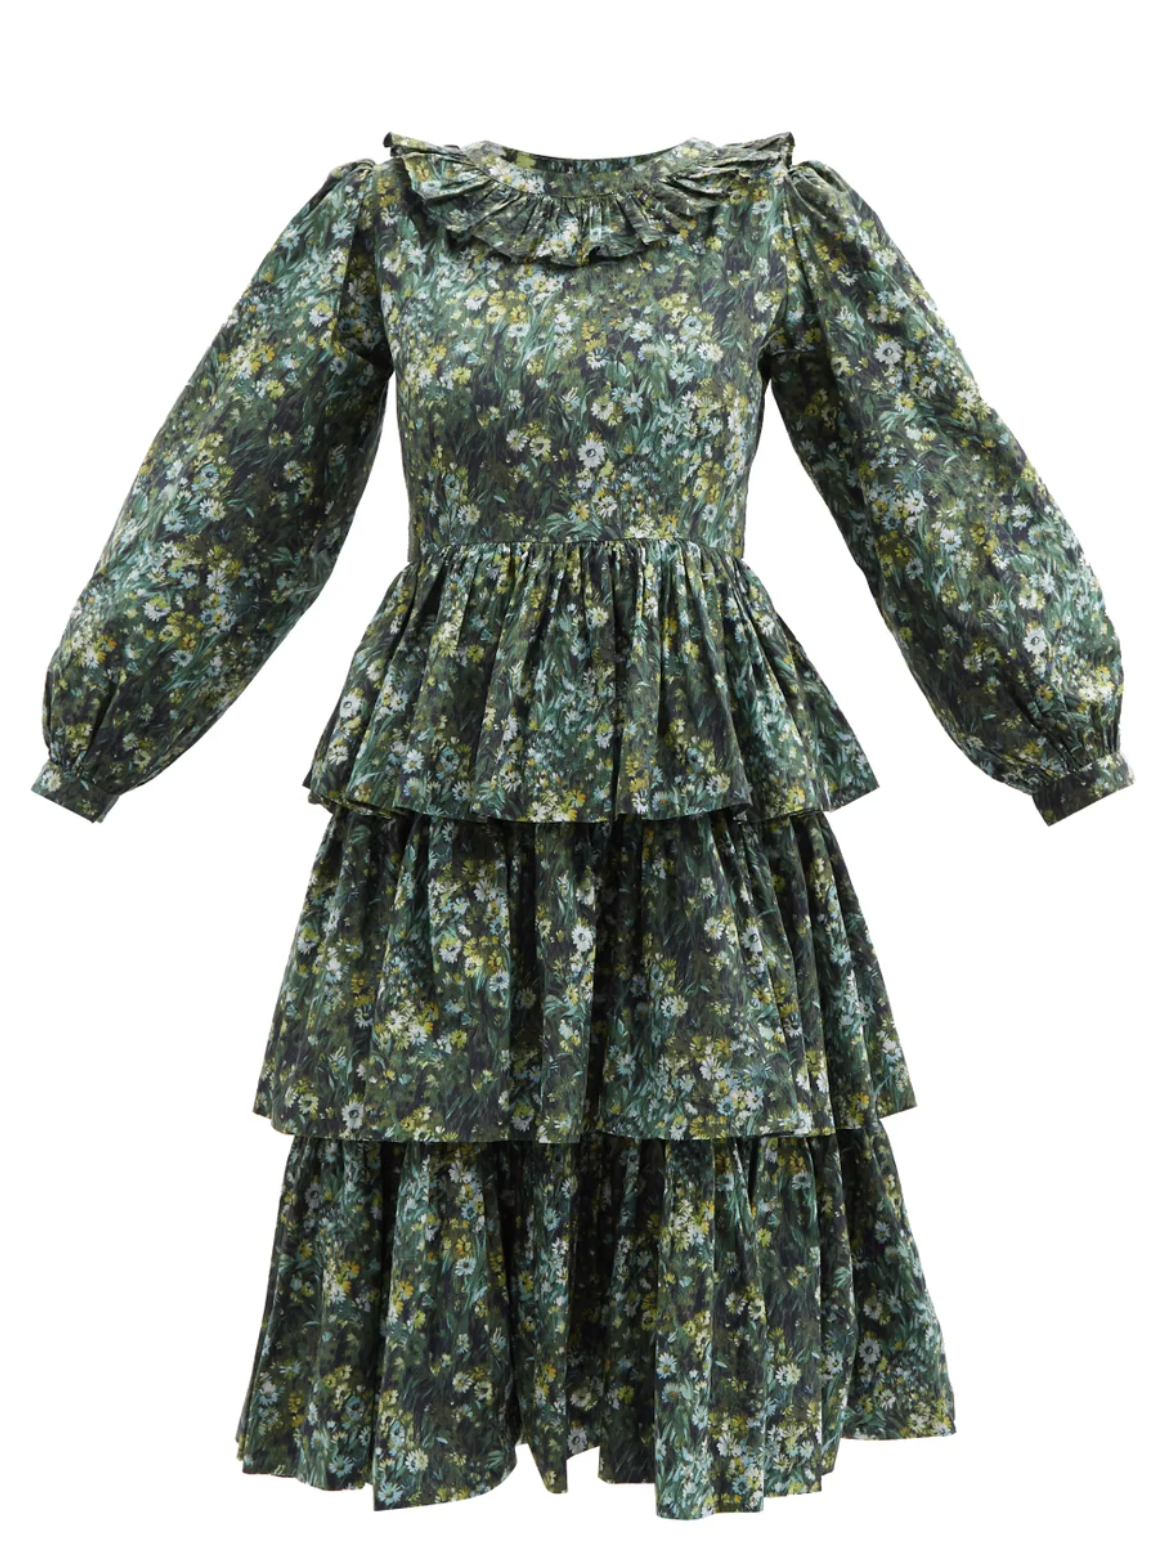 Laura Ashley x Batsheva + Welsh Floral-Print Cotton Dress